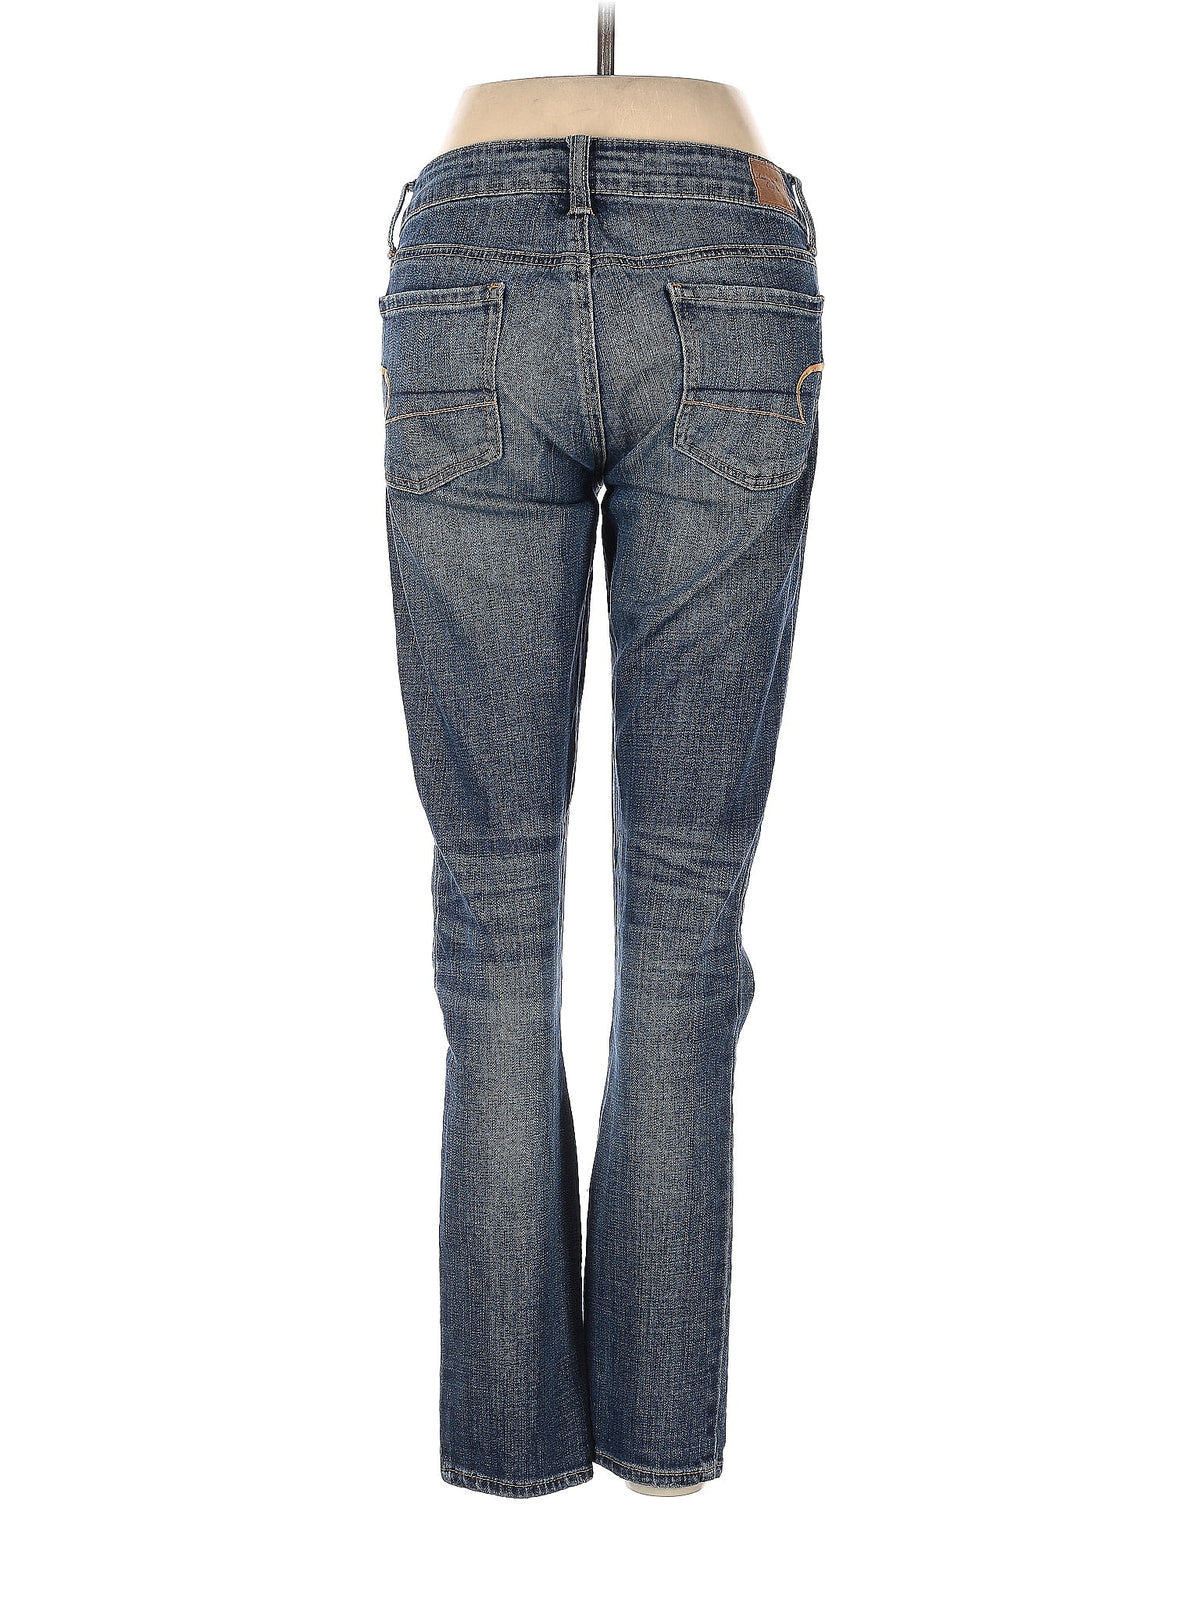 Jeans size - 2